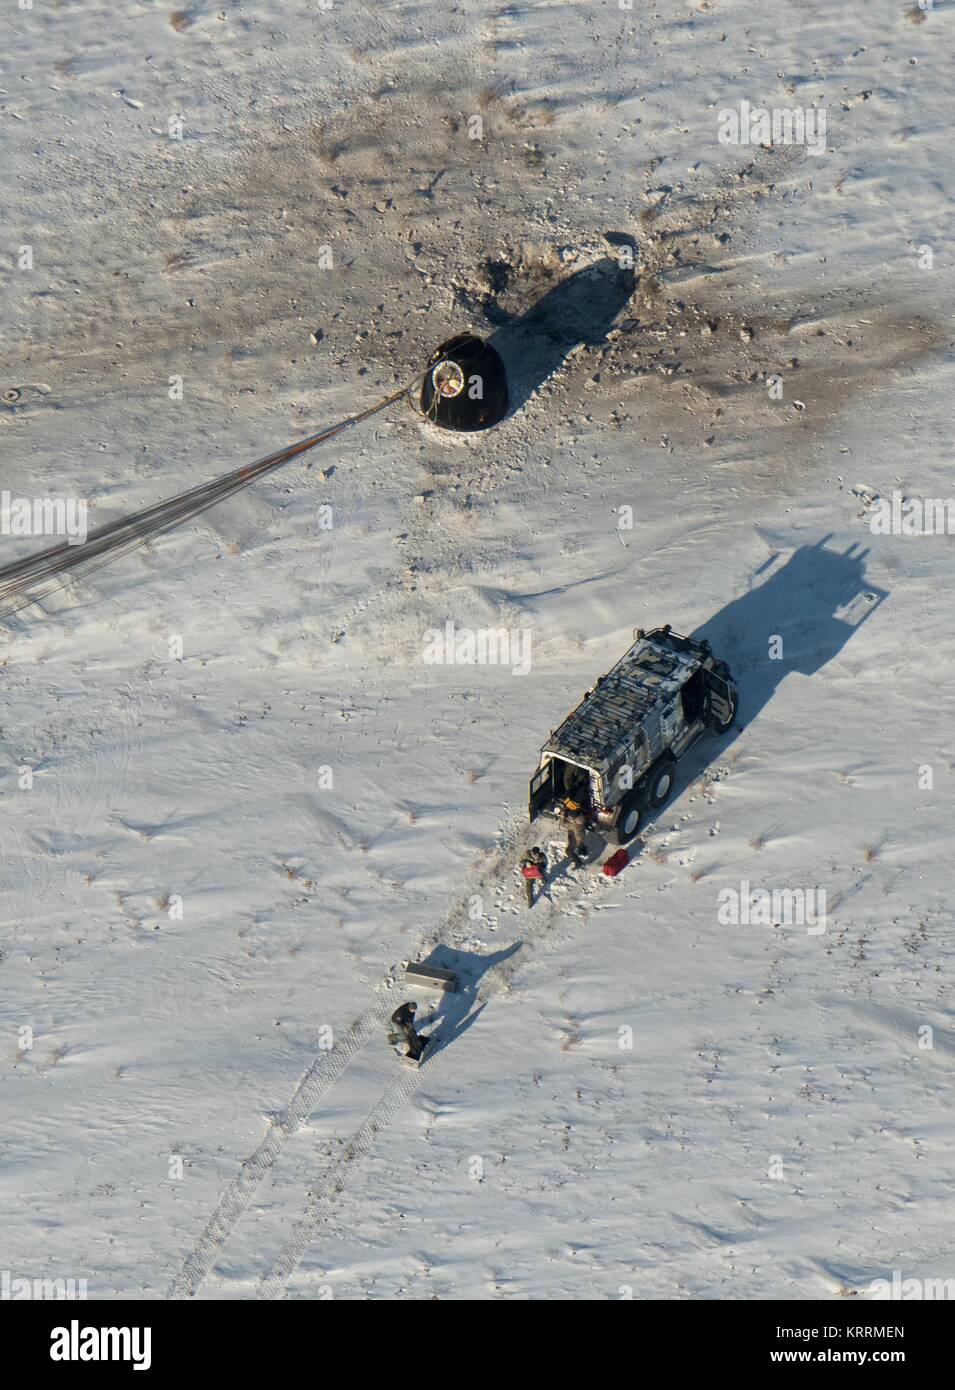 The NASA International Space Station Expedition 53 Soyu MS-05 spacecraft lands in the sand December 14, 2017 in Zhezkazgan, Kazakhstan. Stock Photo